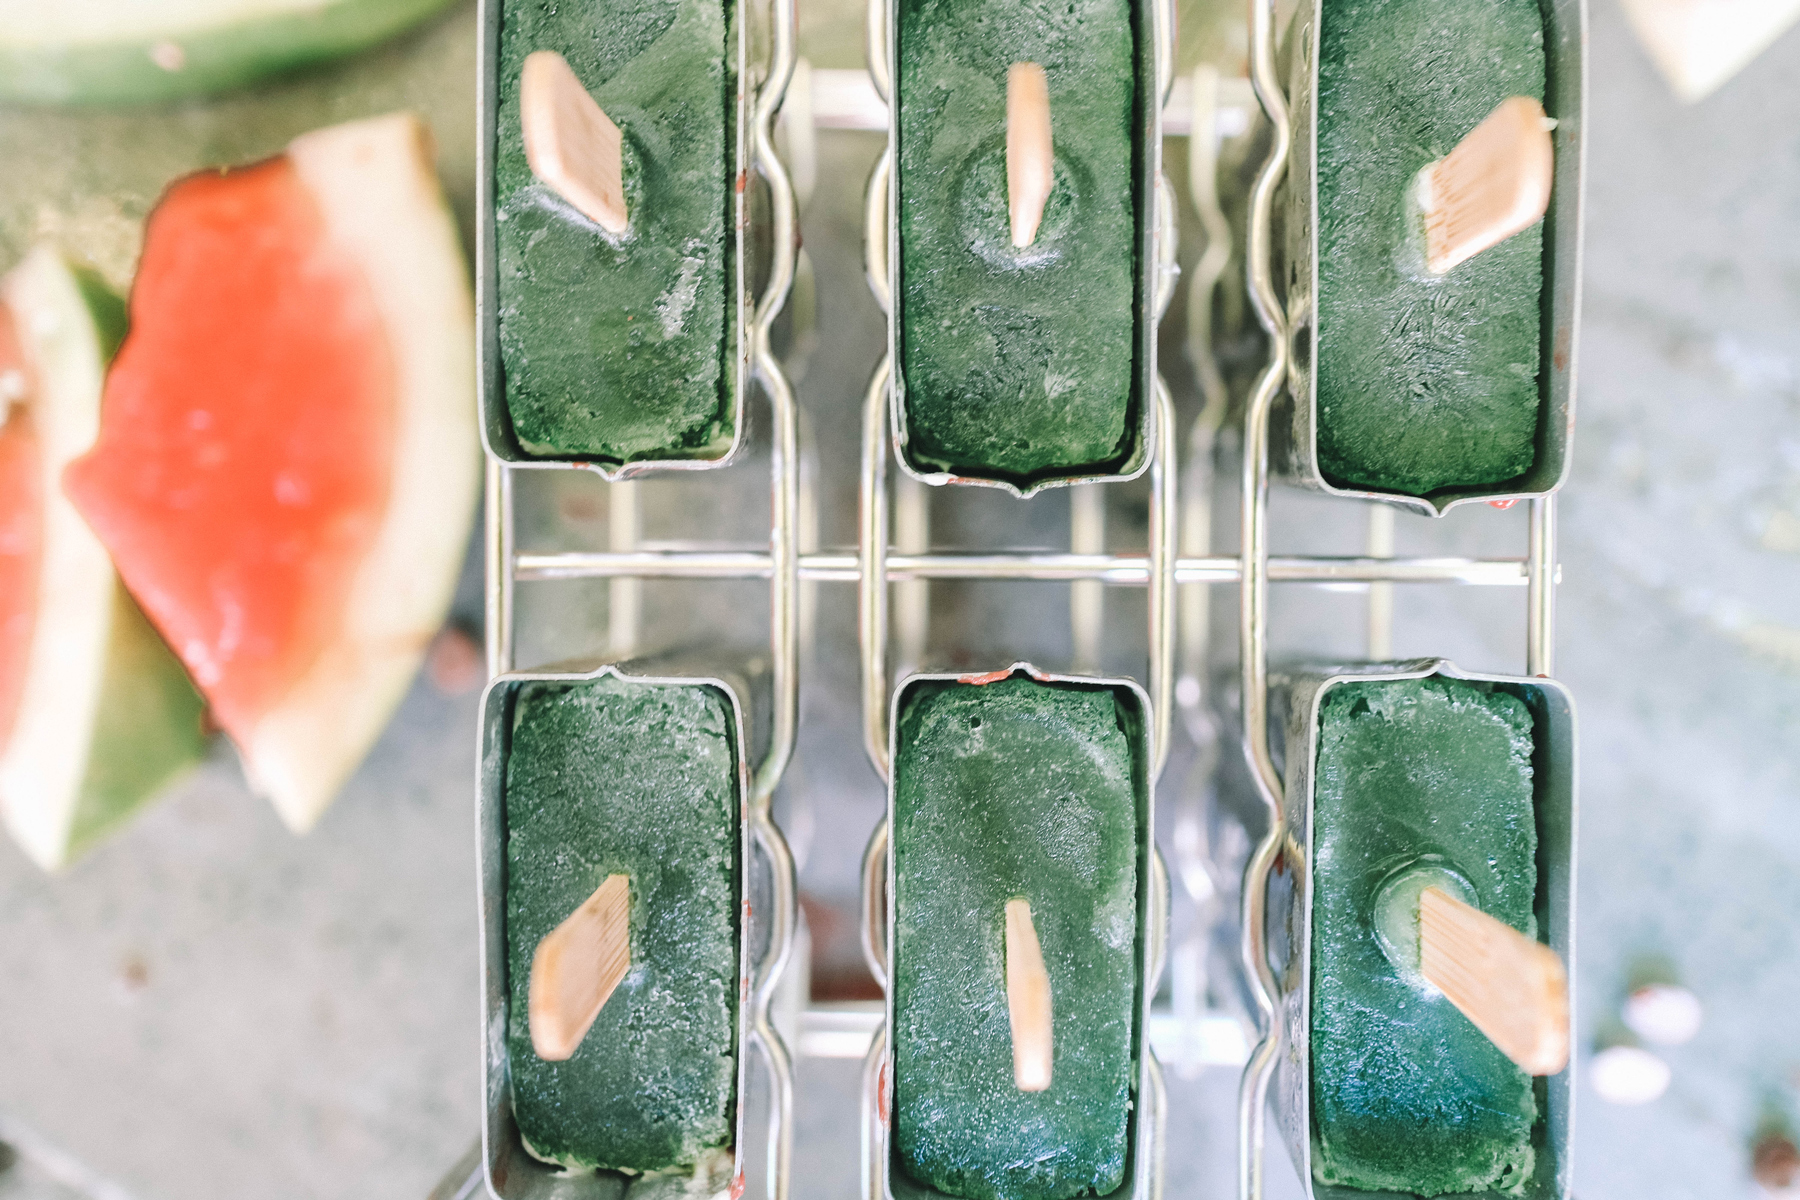 Healthy Watermelon Ice Blocks Ready To Go